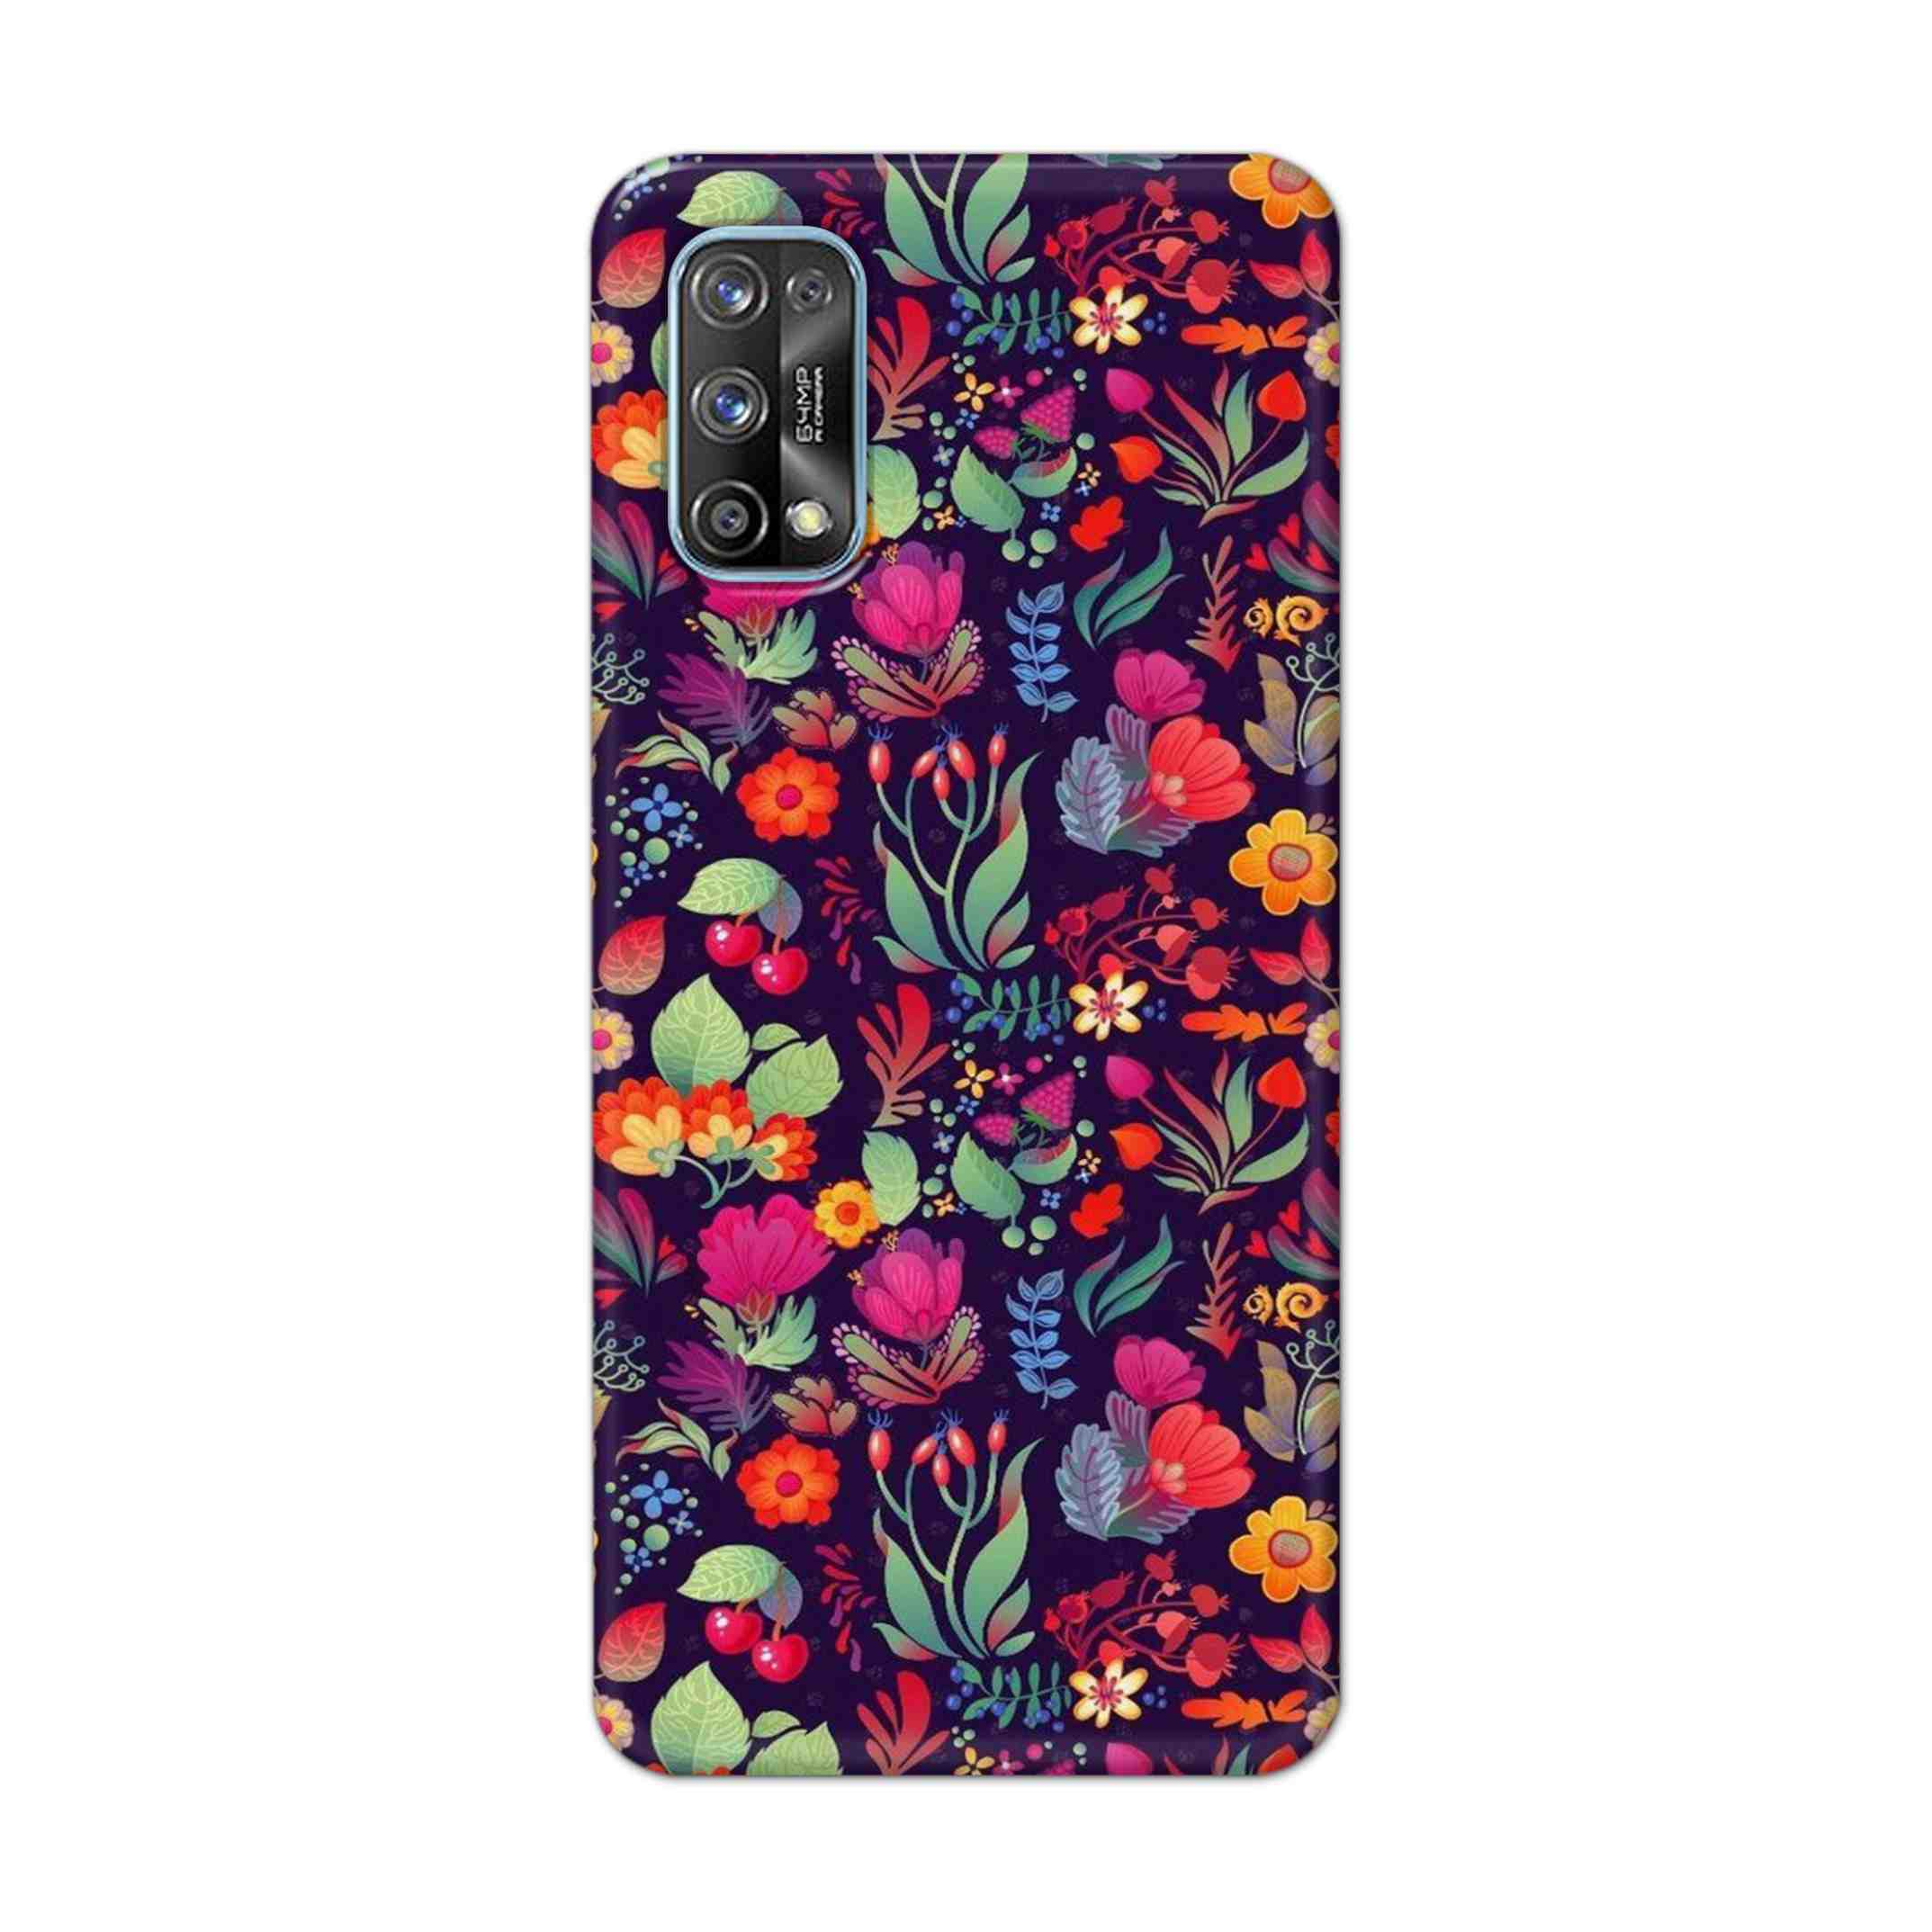 Buy Fruits Flower Hard Back Mobile Phone Case Cover For Realme 7 Pro Online